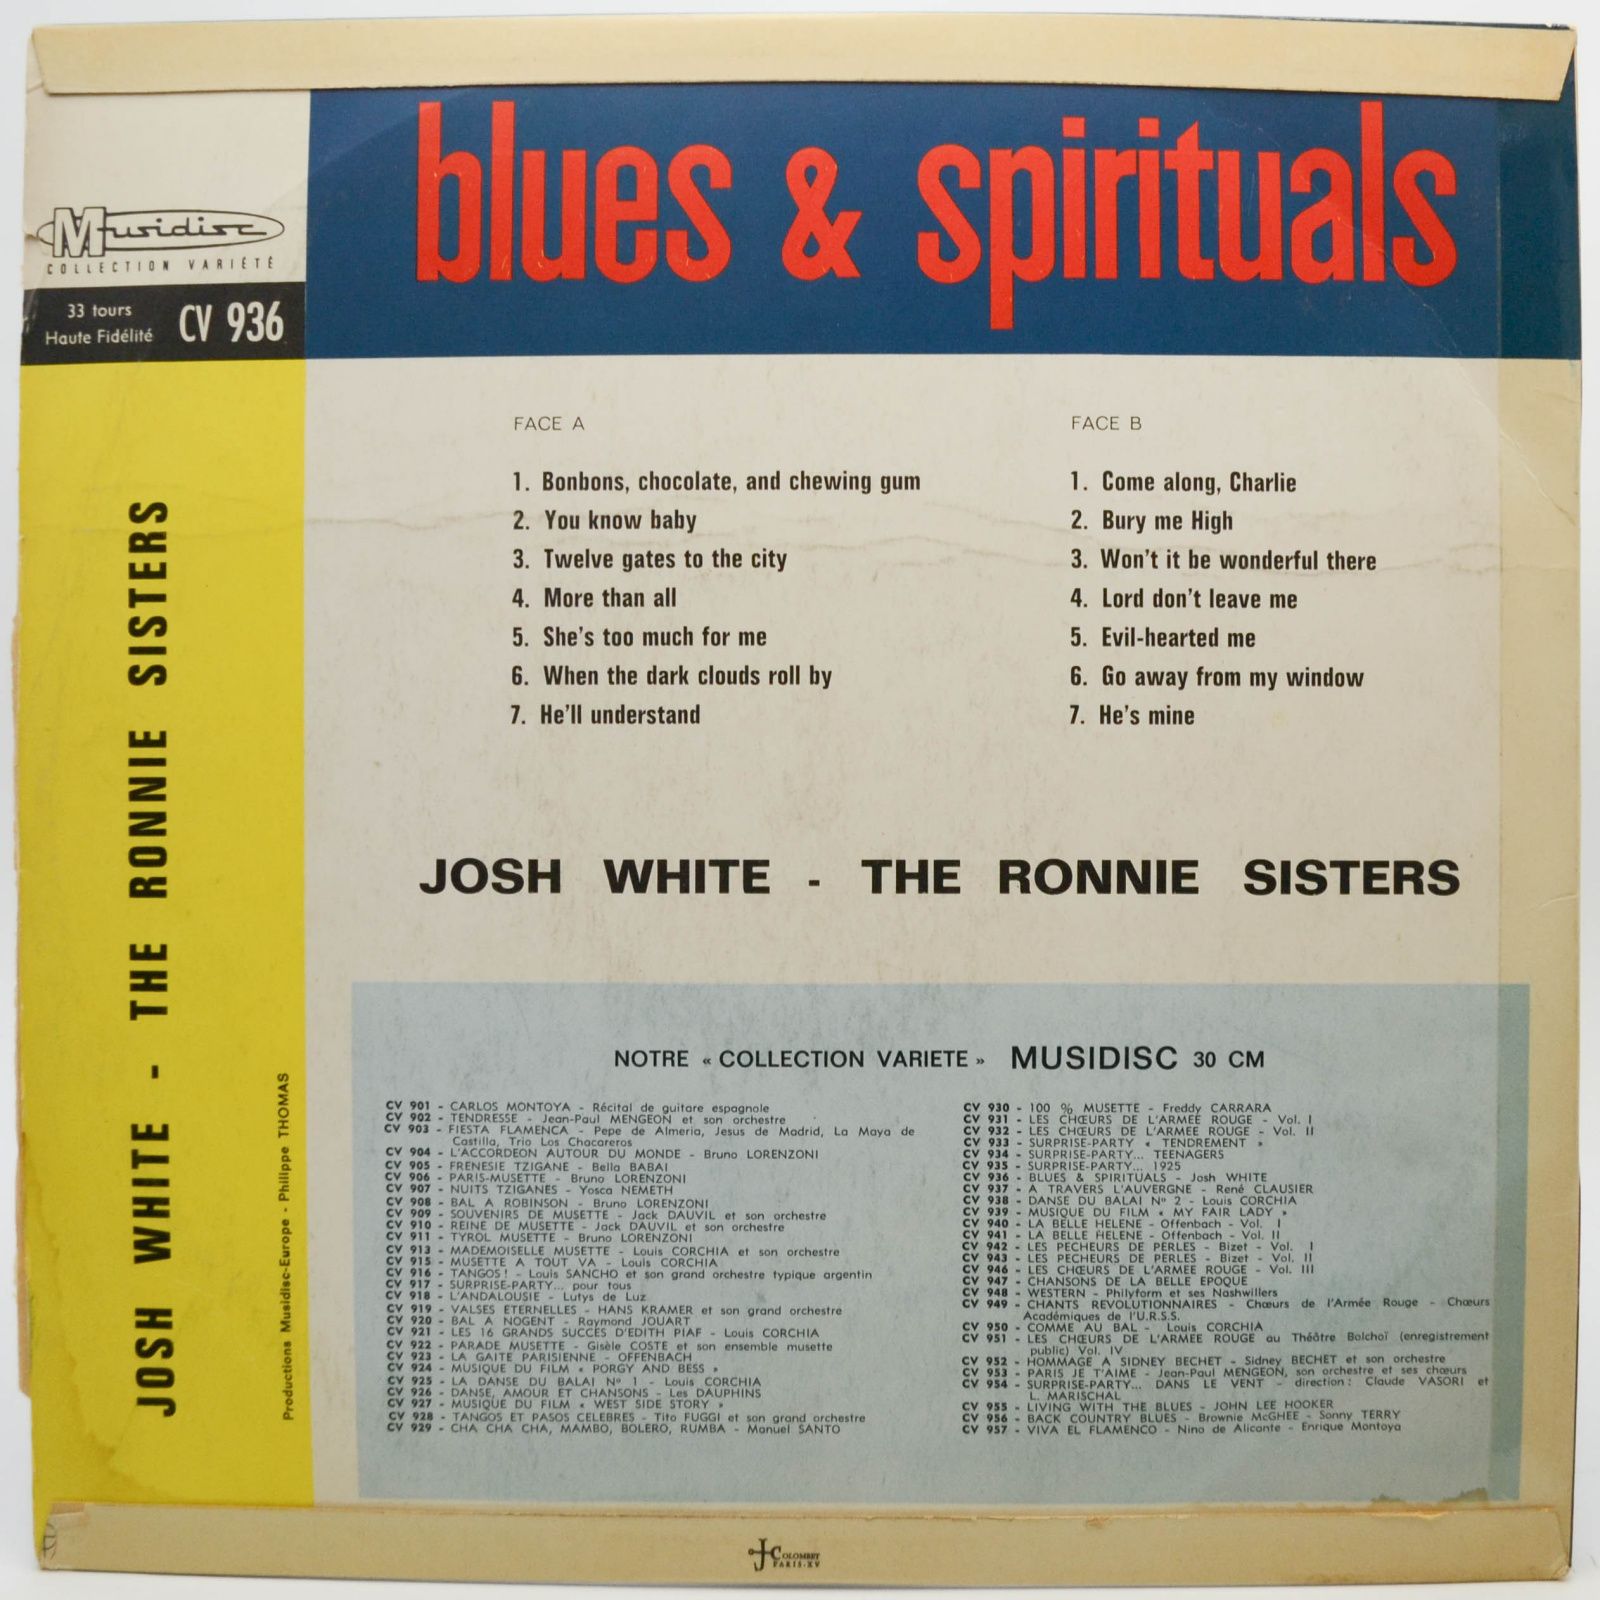 Josh White - The Ronnie Sisters — Blues & Spirituals, 1973